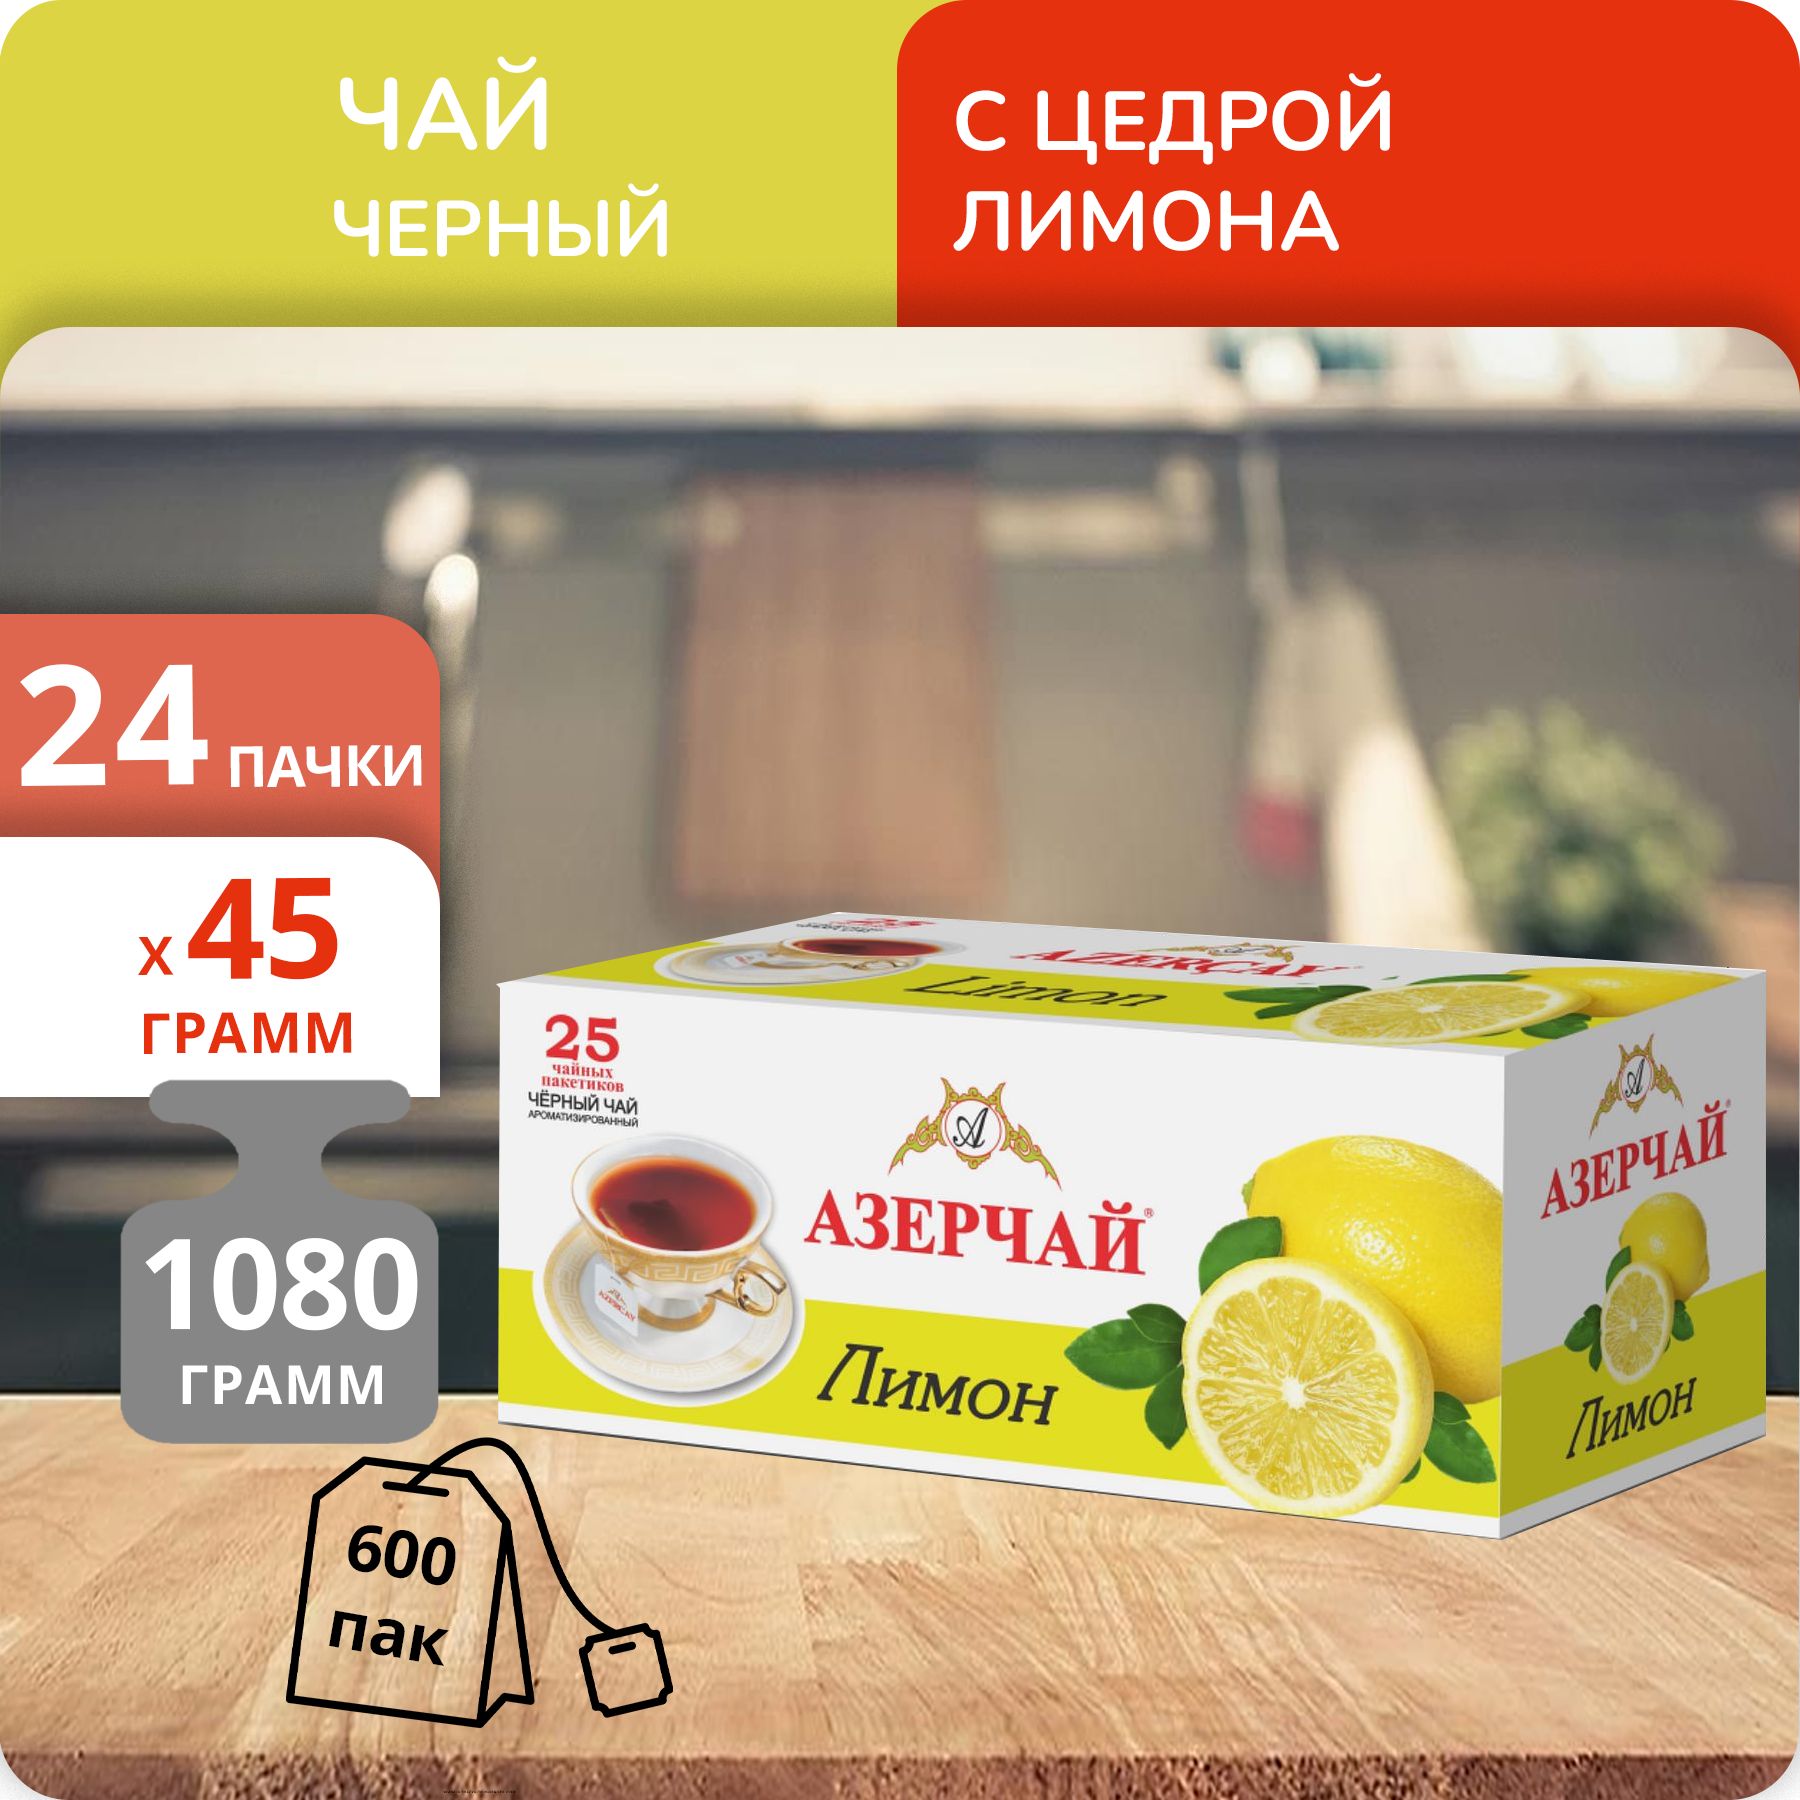 Чай черный Азерчай с Цедрой лимона 1,8г х 25, 24 шт